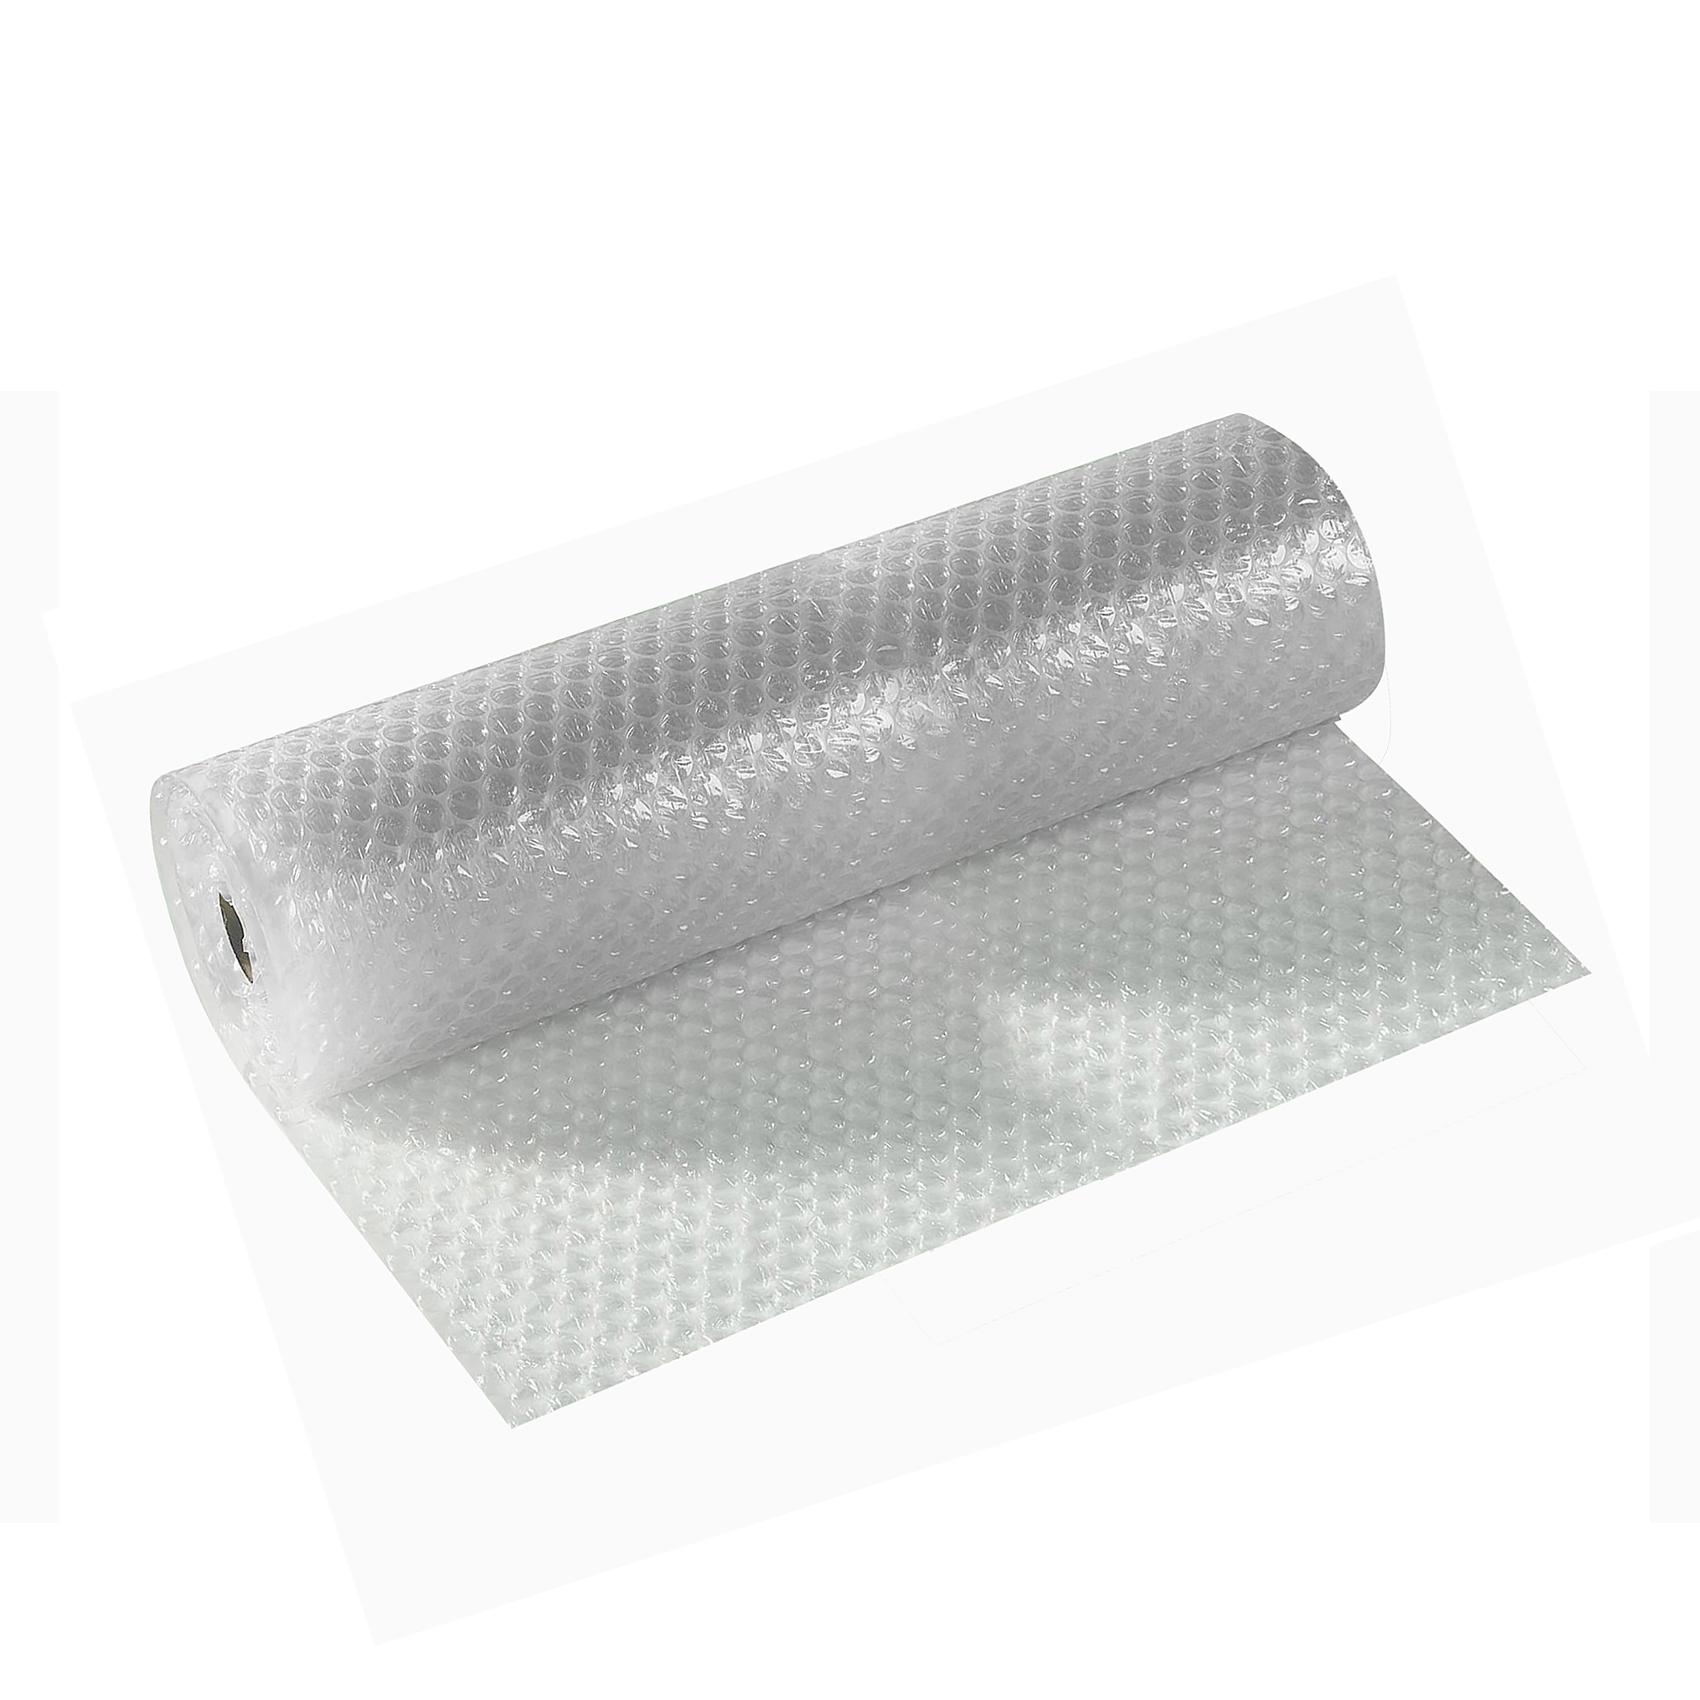 جي تي تي لفافة فقاعات هواء للتغليف 1 × 1.5 متر - شفاف